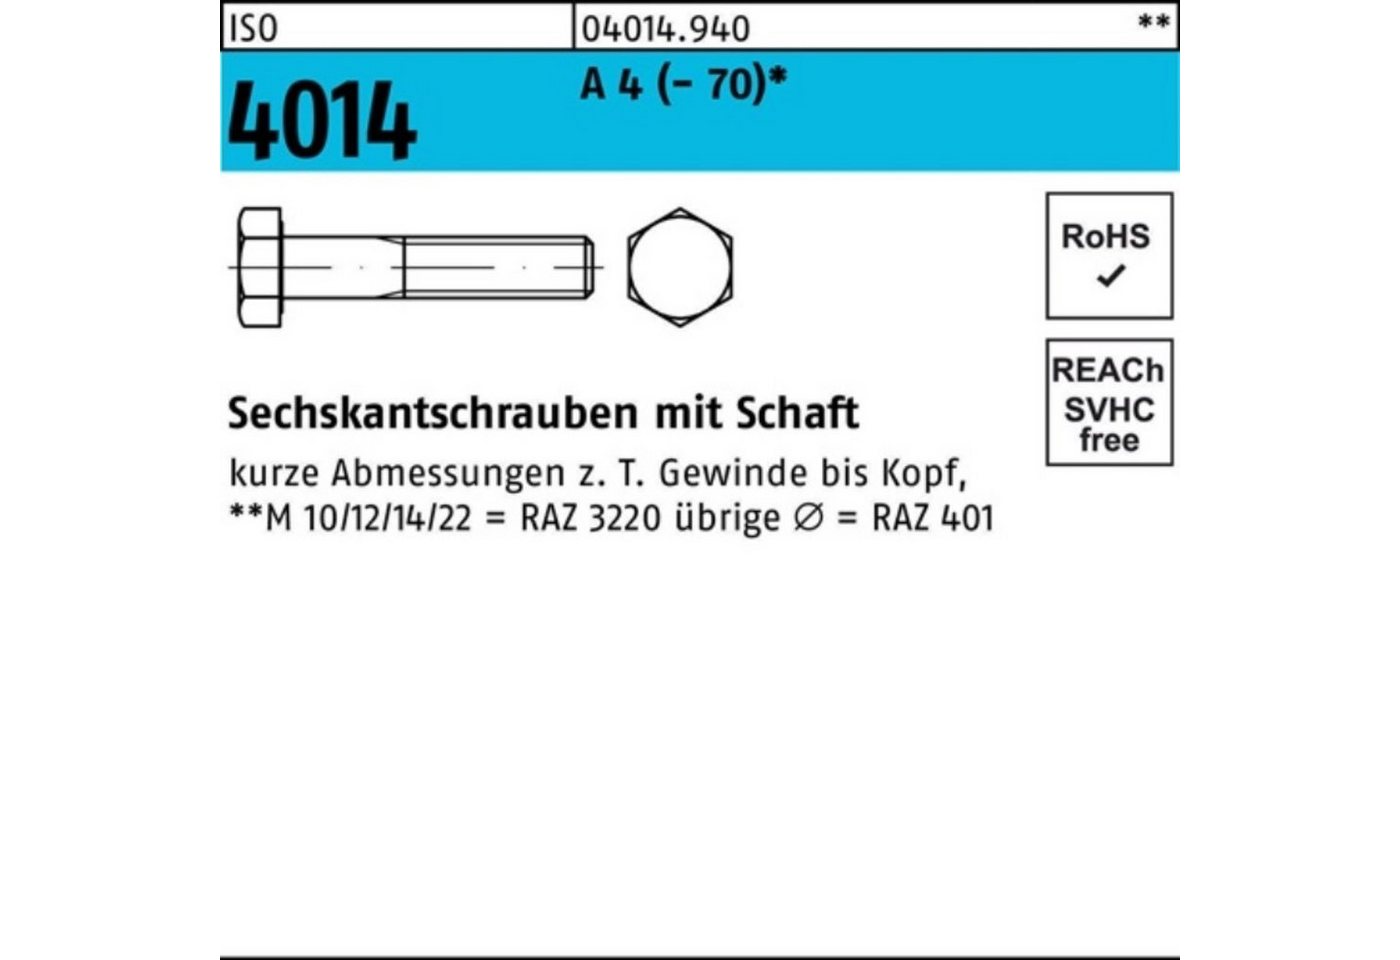 Bufab Sechskantschraube 100er Pack Sechskantschraube ISO 4014 Schaft M8x 40 A 4 (70) 100 St von Bufab